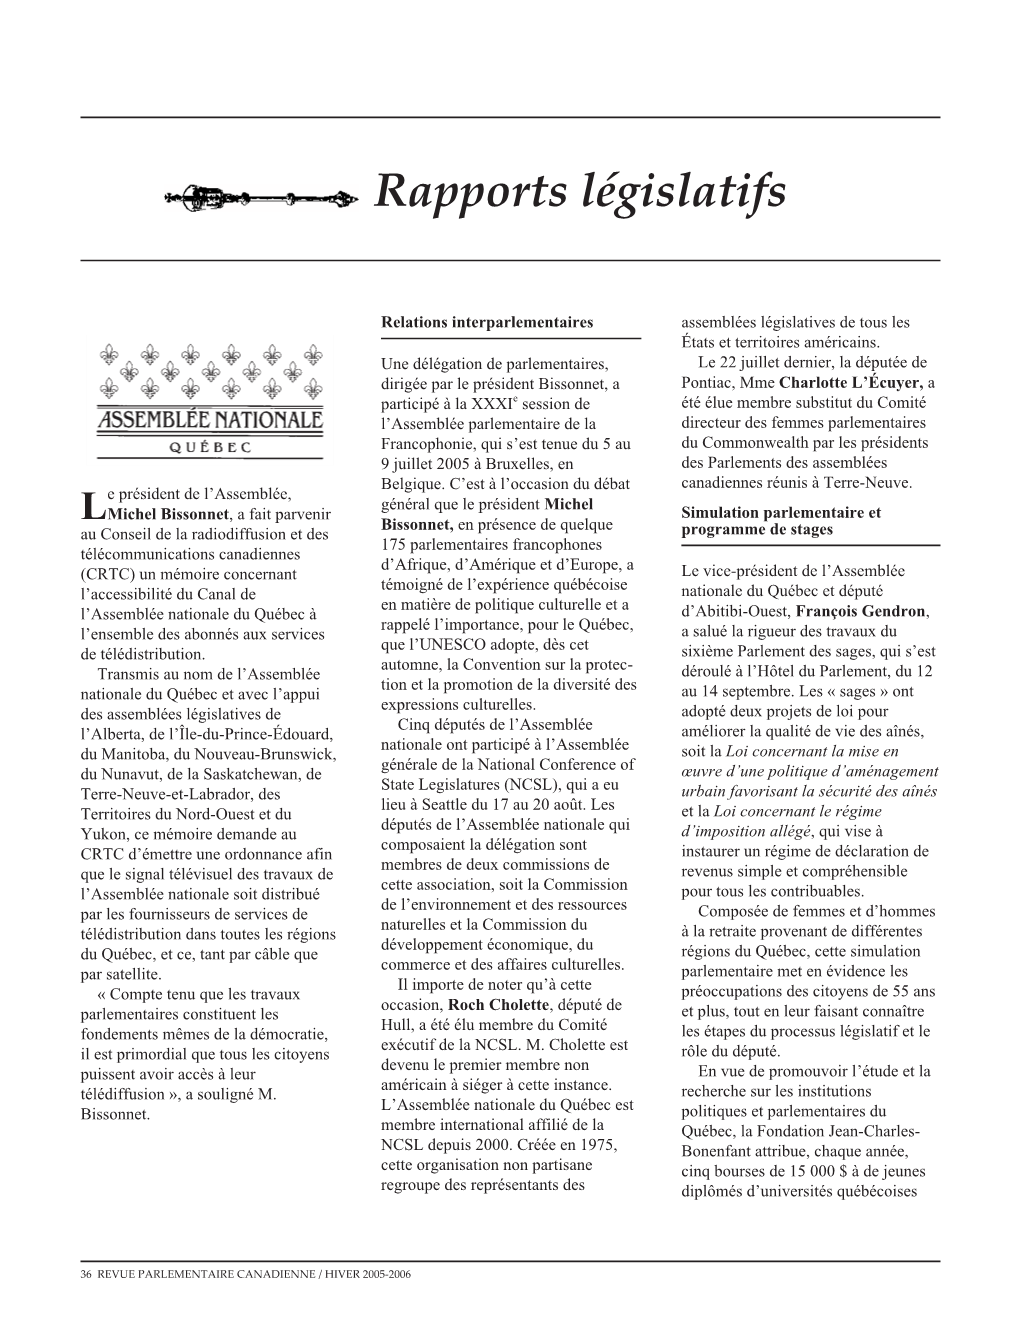 Rapports Législatifs